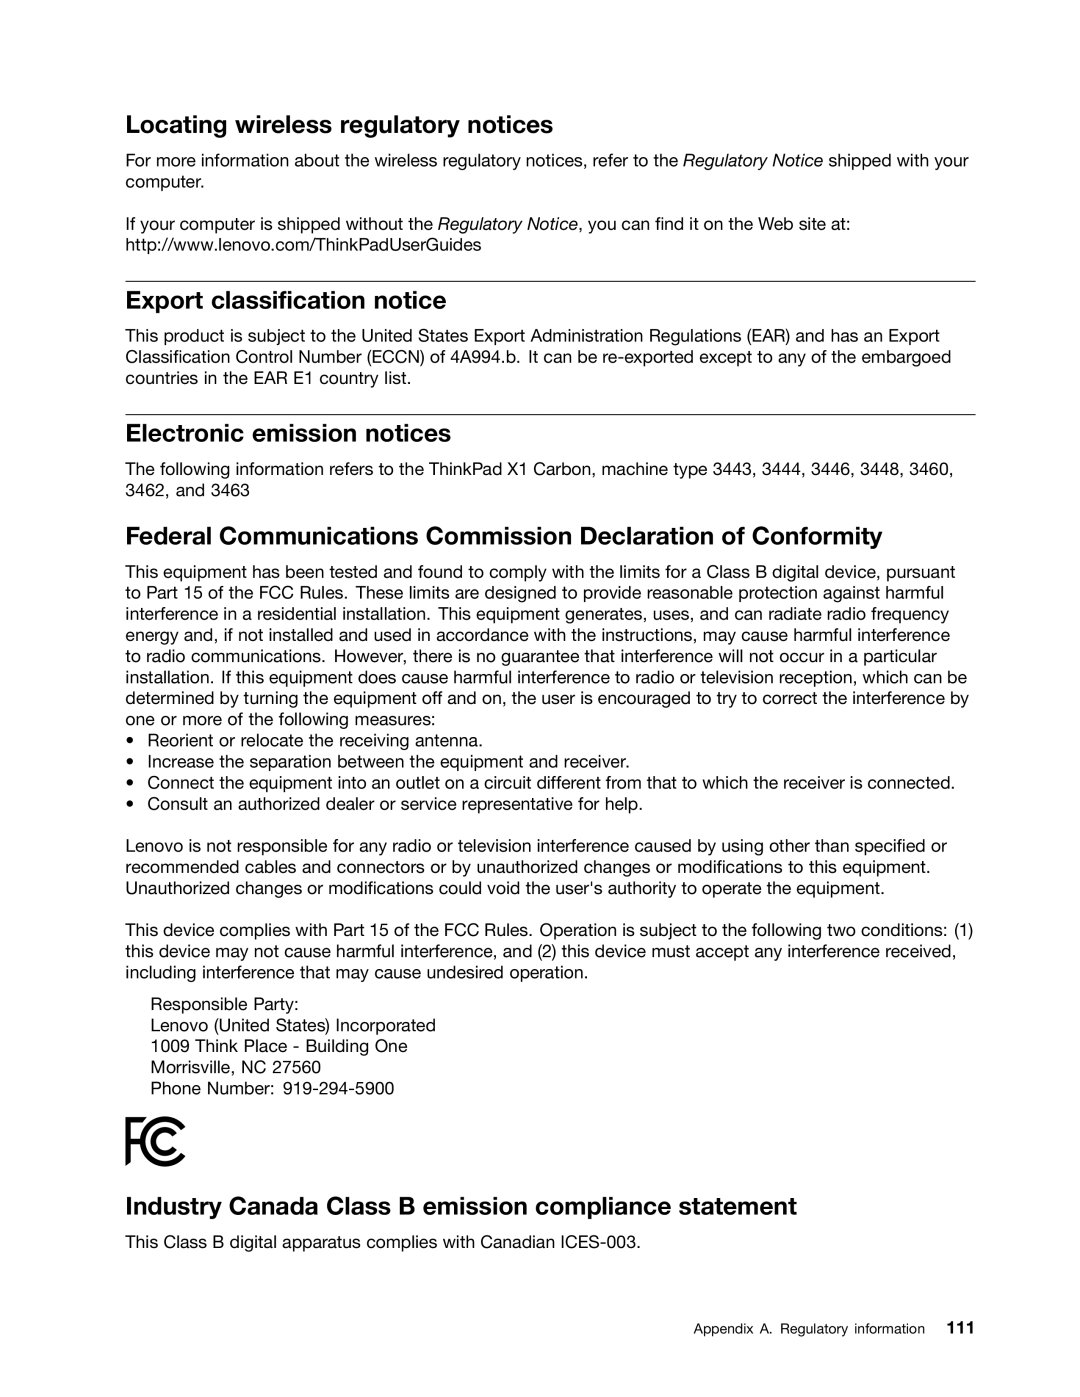 Lenovo I53427U180SSD, X1 Locating wireless regulatory notices, Export classification notice, Electronic emission notices 